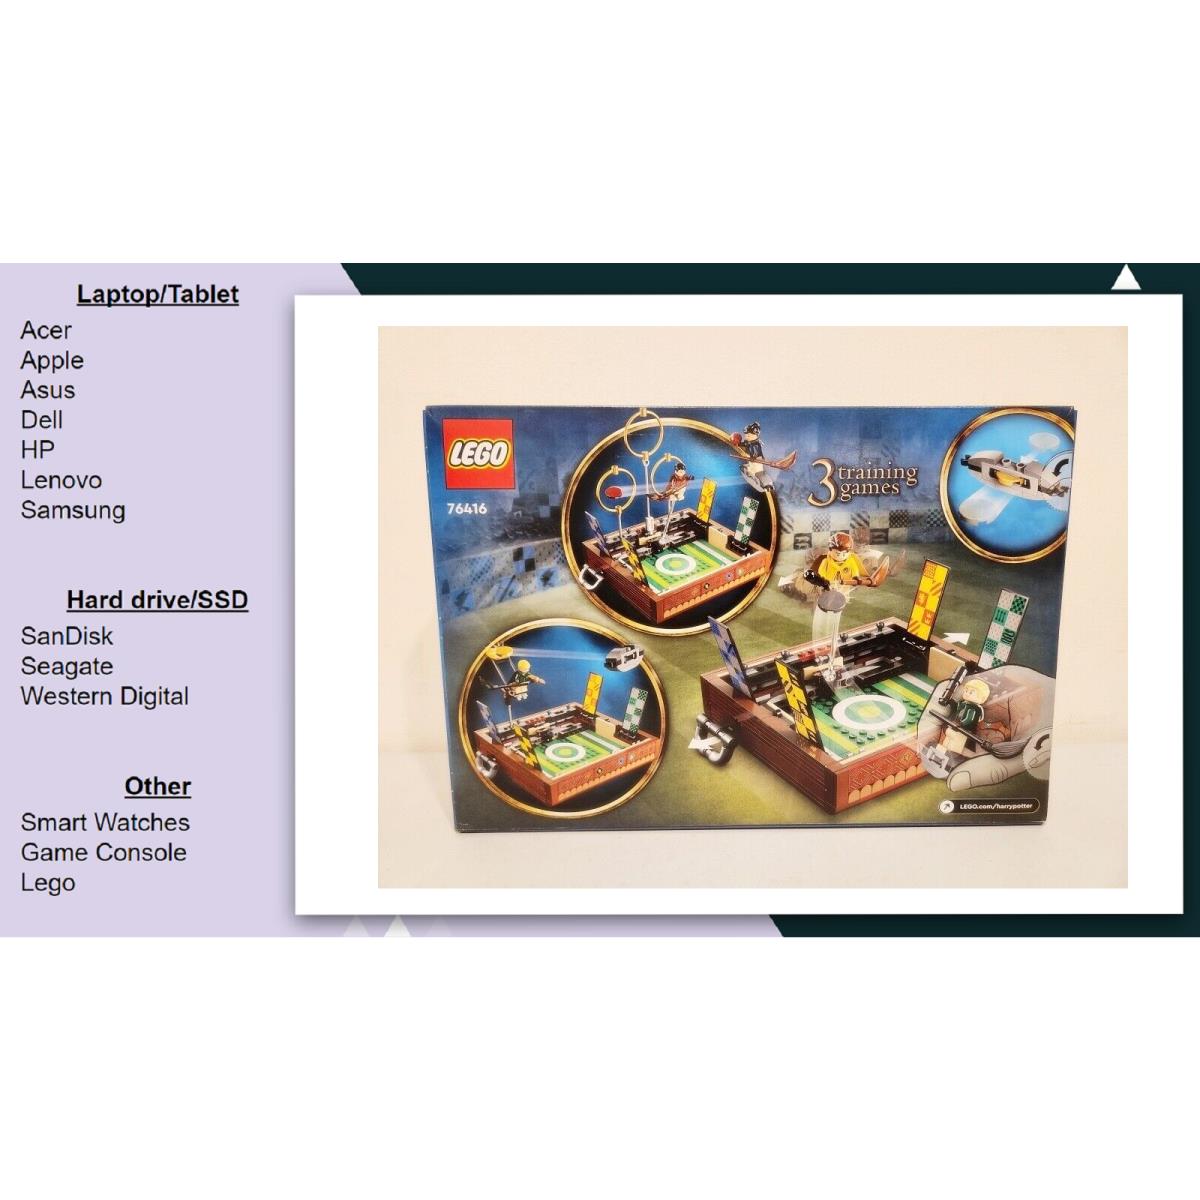 Lego 76416 Harry Potter Quidditch Trunk 9+ Yrs 599 Pcs 4 Minifigures